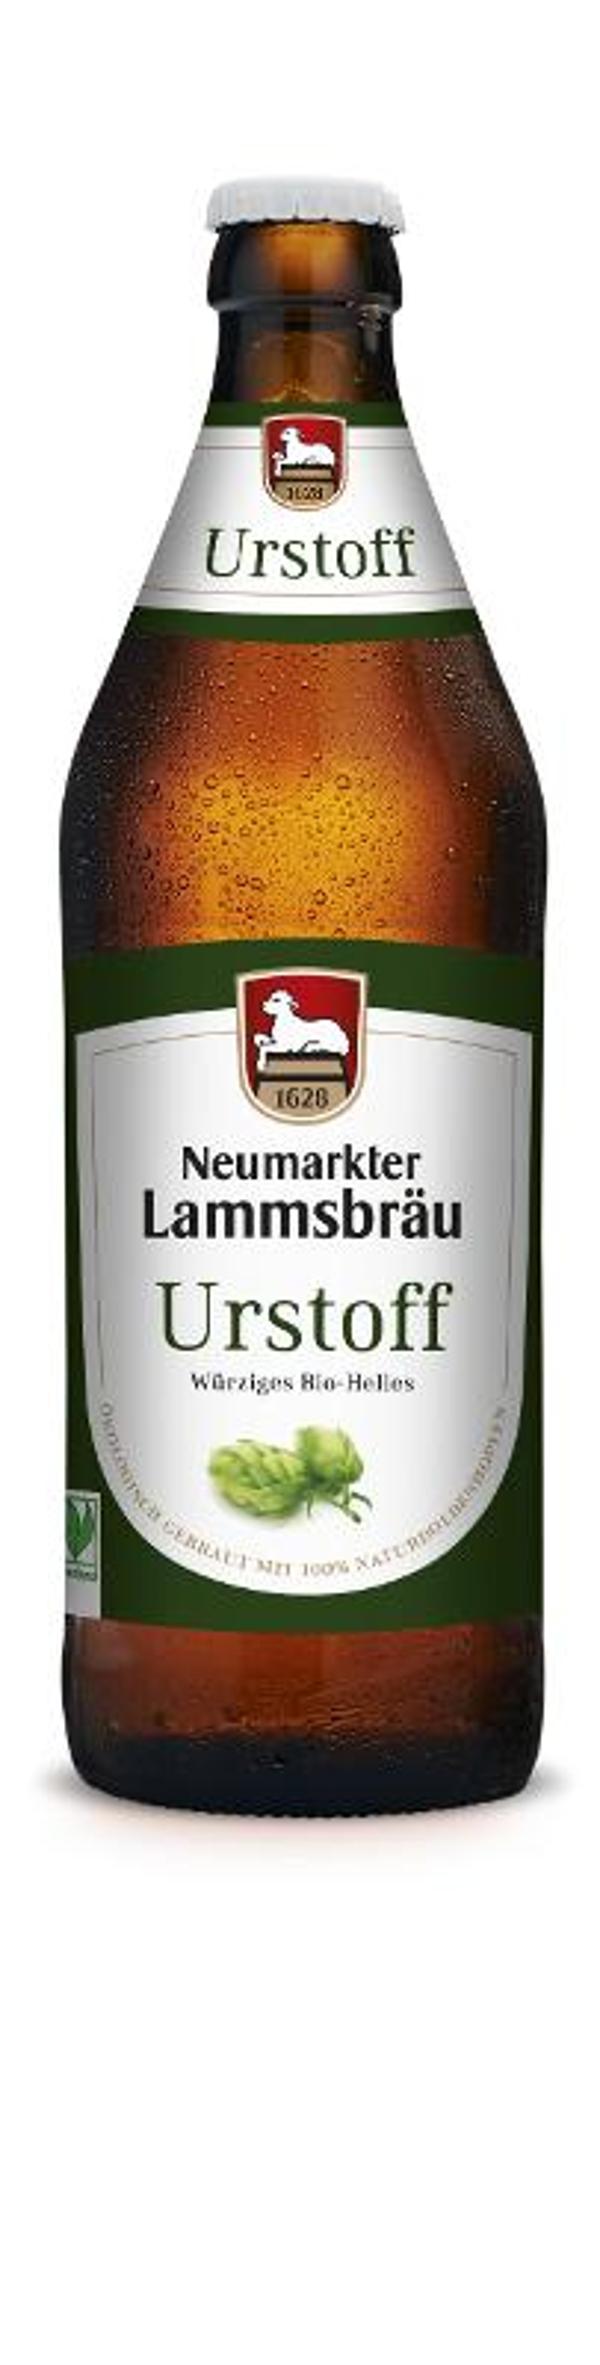 Produktfoto zu Lammsbräu Öko Urstoff 0,5 l Neumarkter Lammsbräu